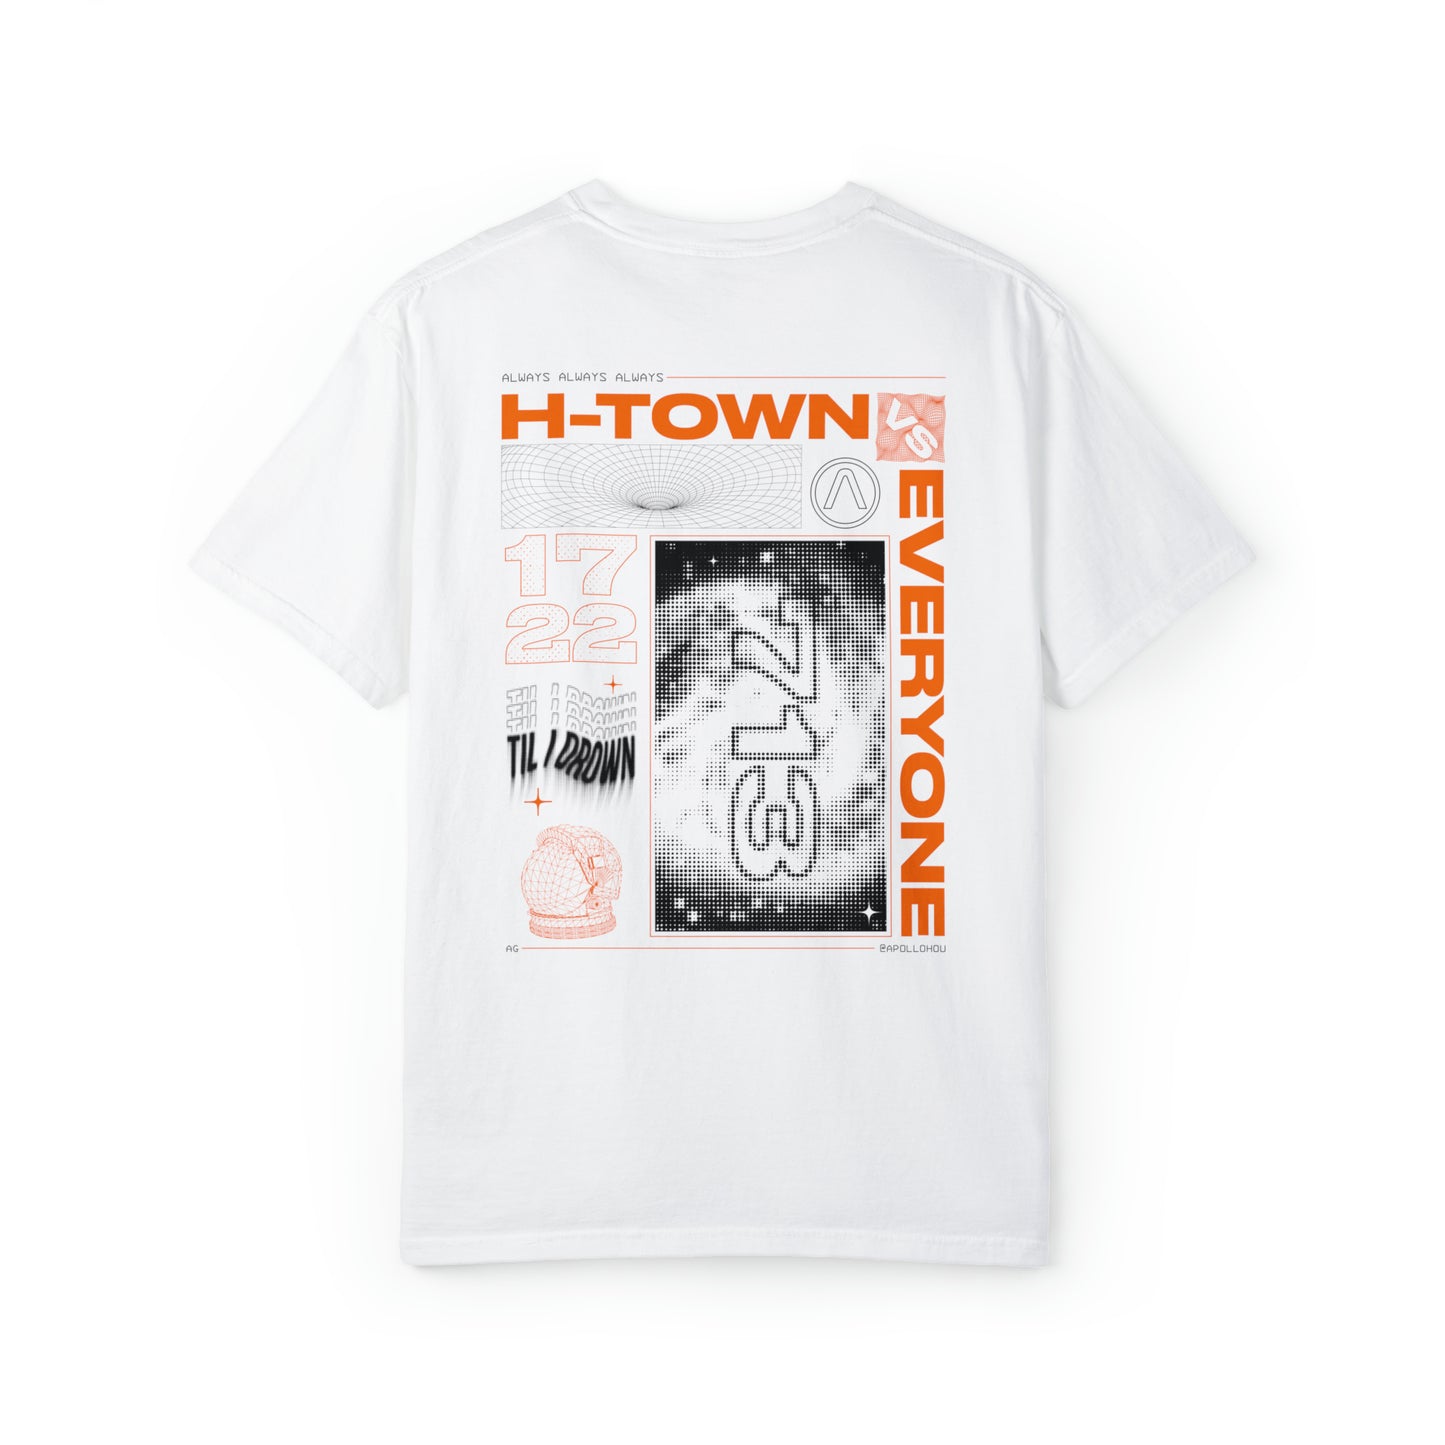 H-Town Always (Nova) Unisex Comfort Colors T-shirt